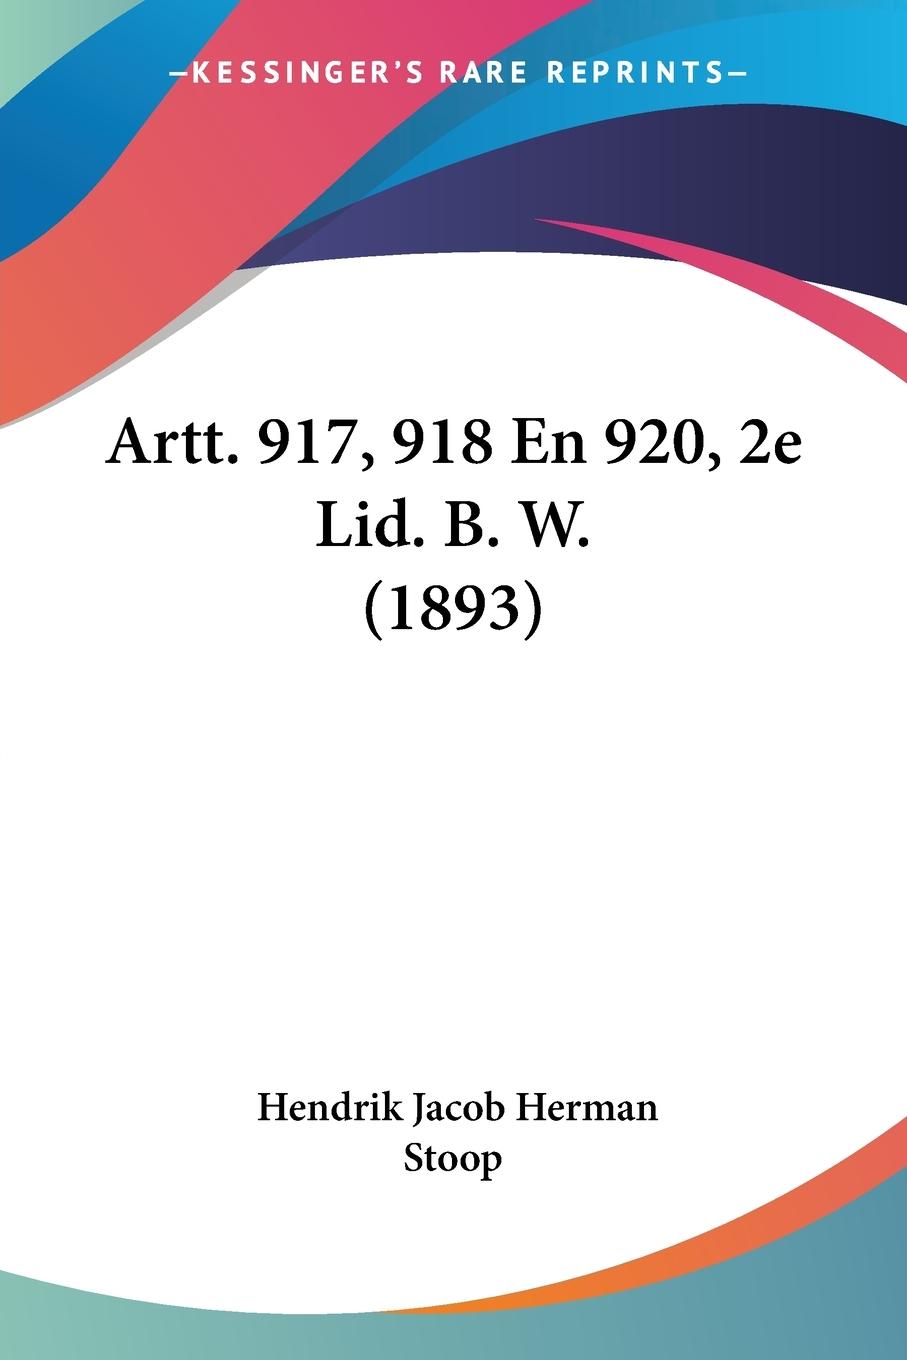 Artt. 917, 918 En 920, 2e Lid. B. W. (1893) - Stoop, Hendrik Jacob Herman